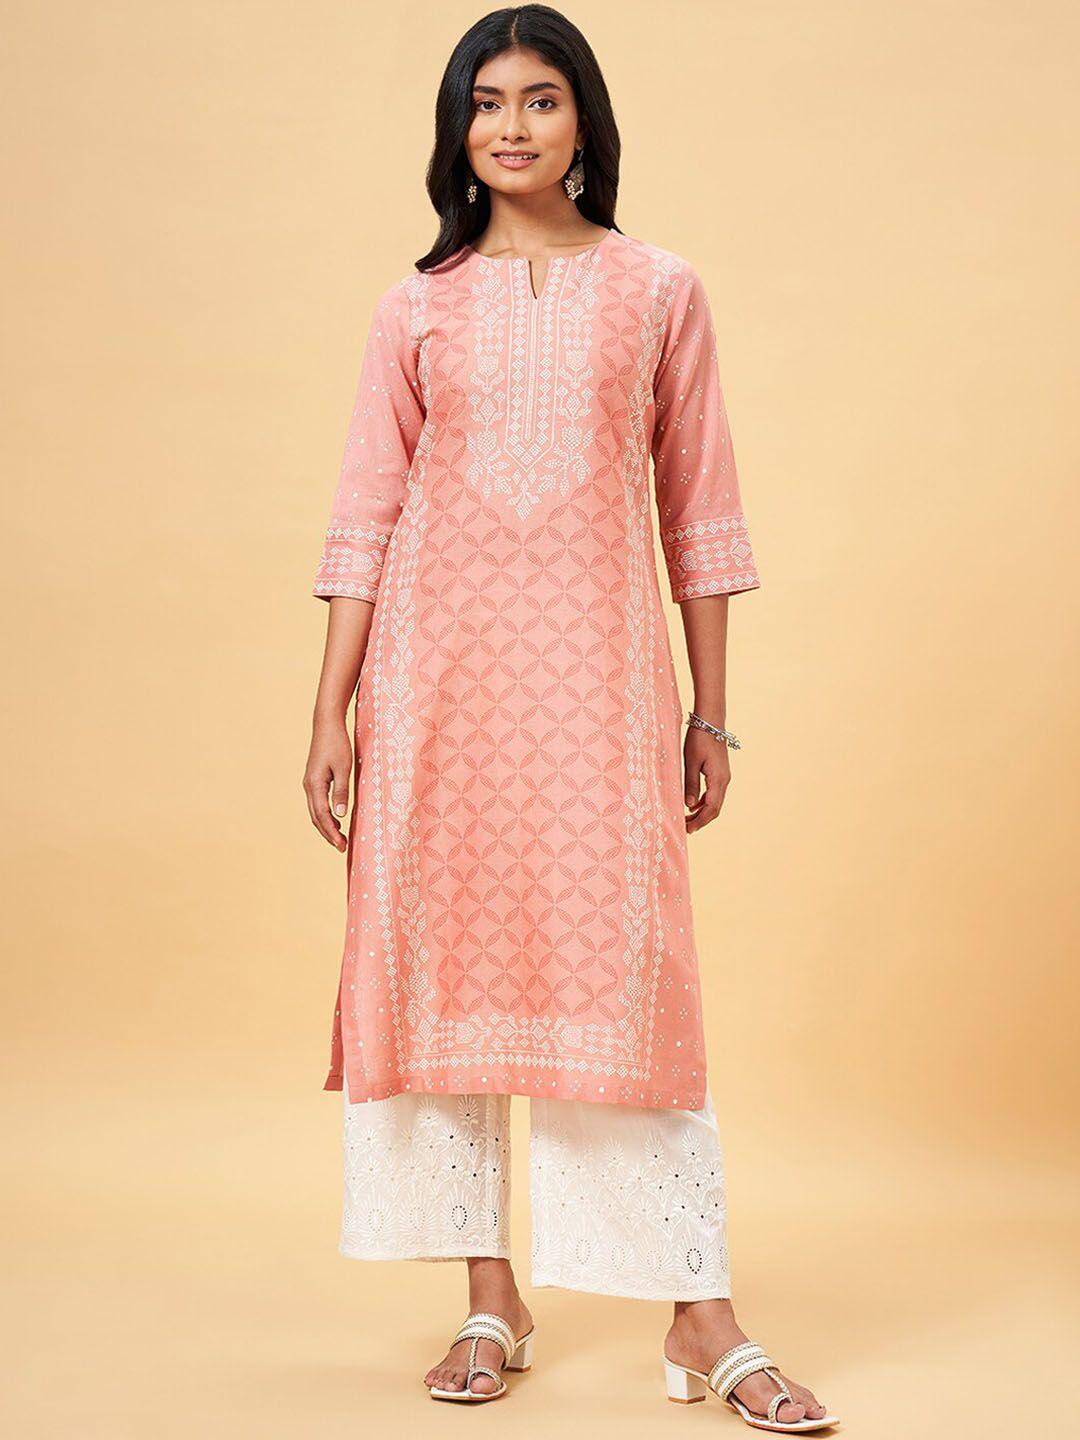 rangmanch by pantaloons women geometric embroidered keyhole neck flared sleeves thread work kurta